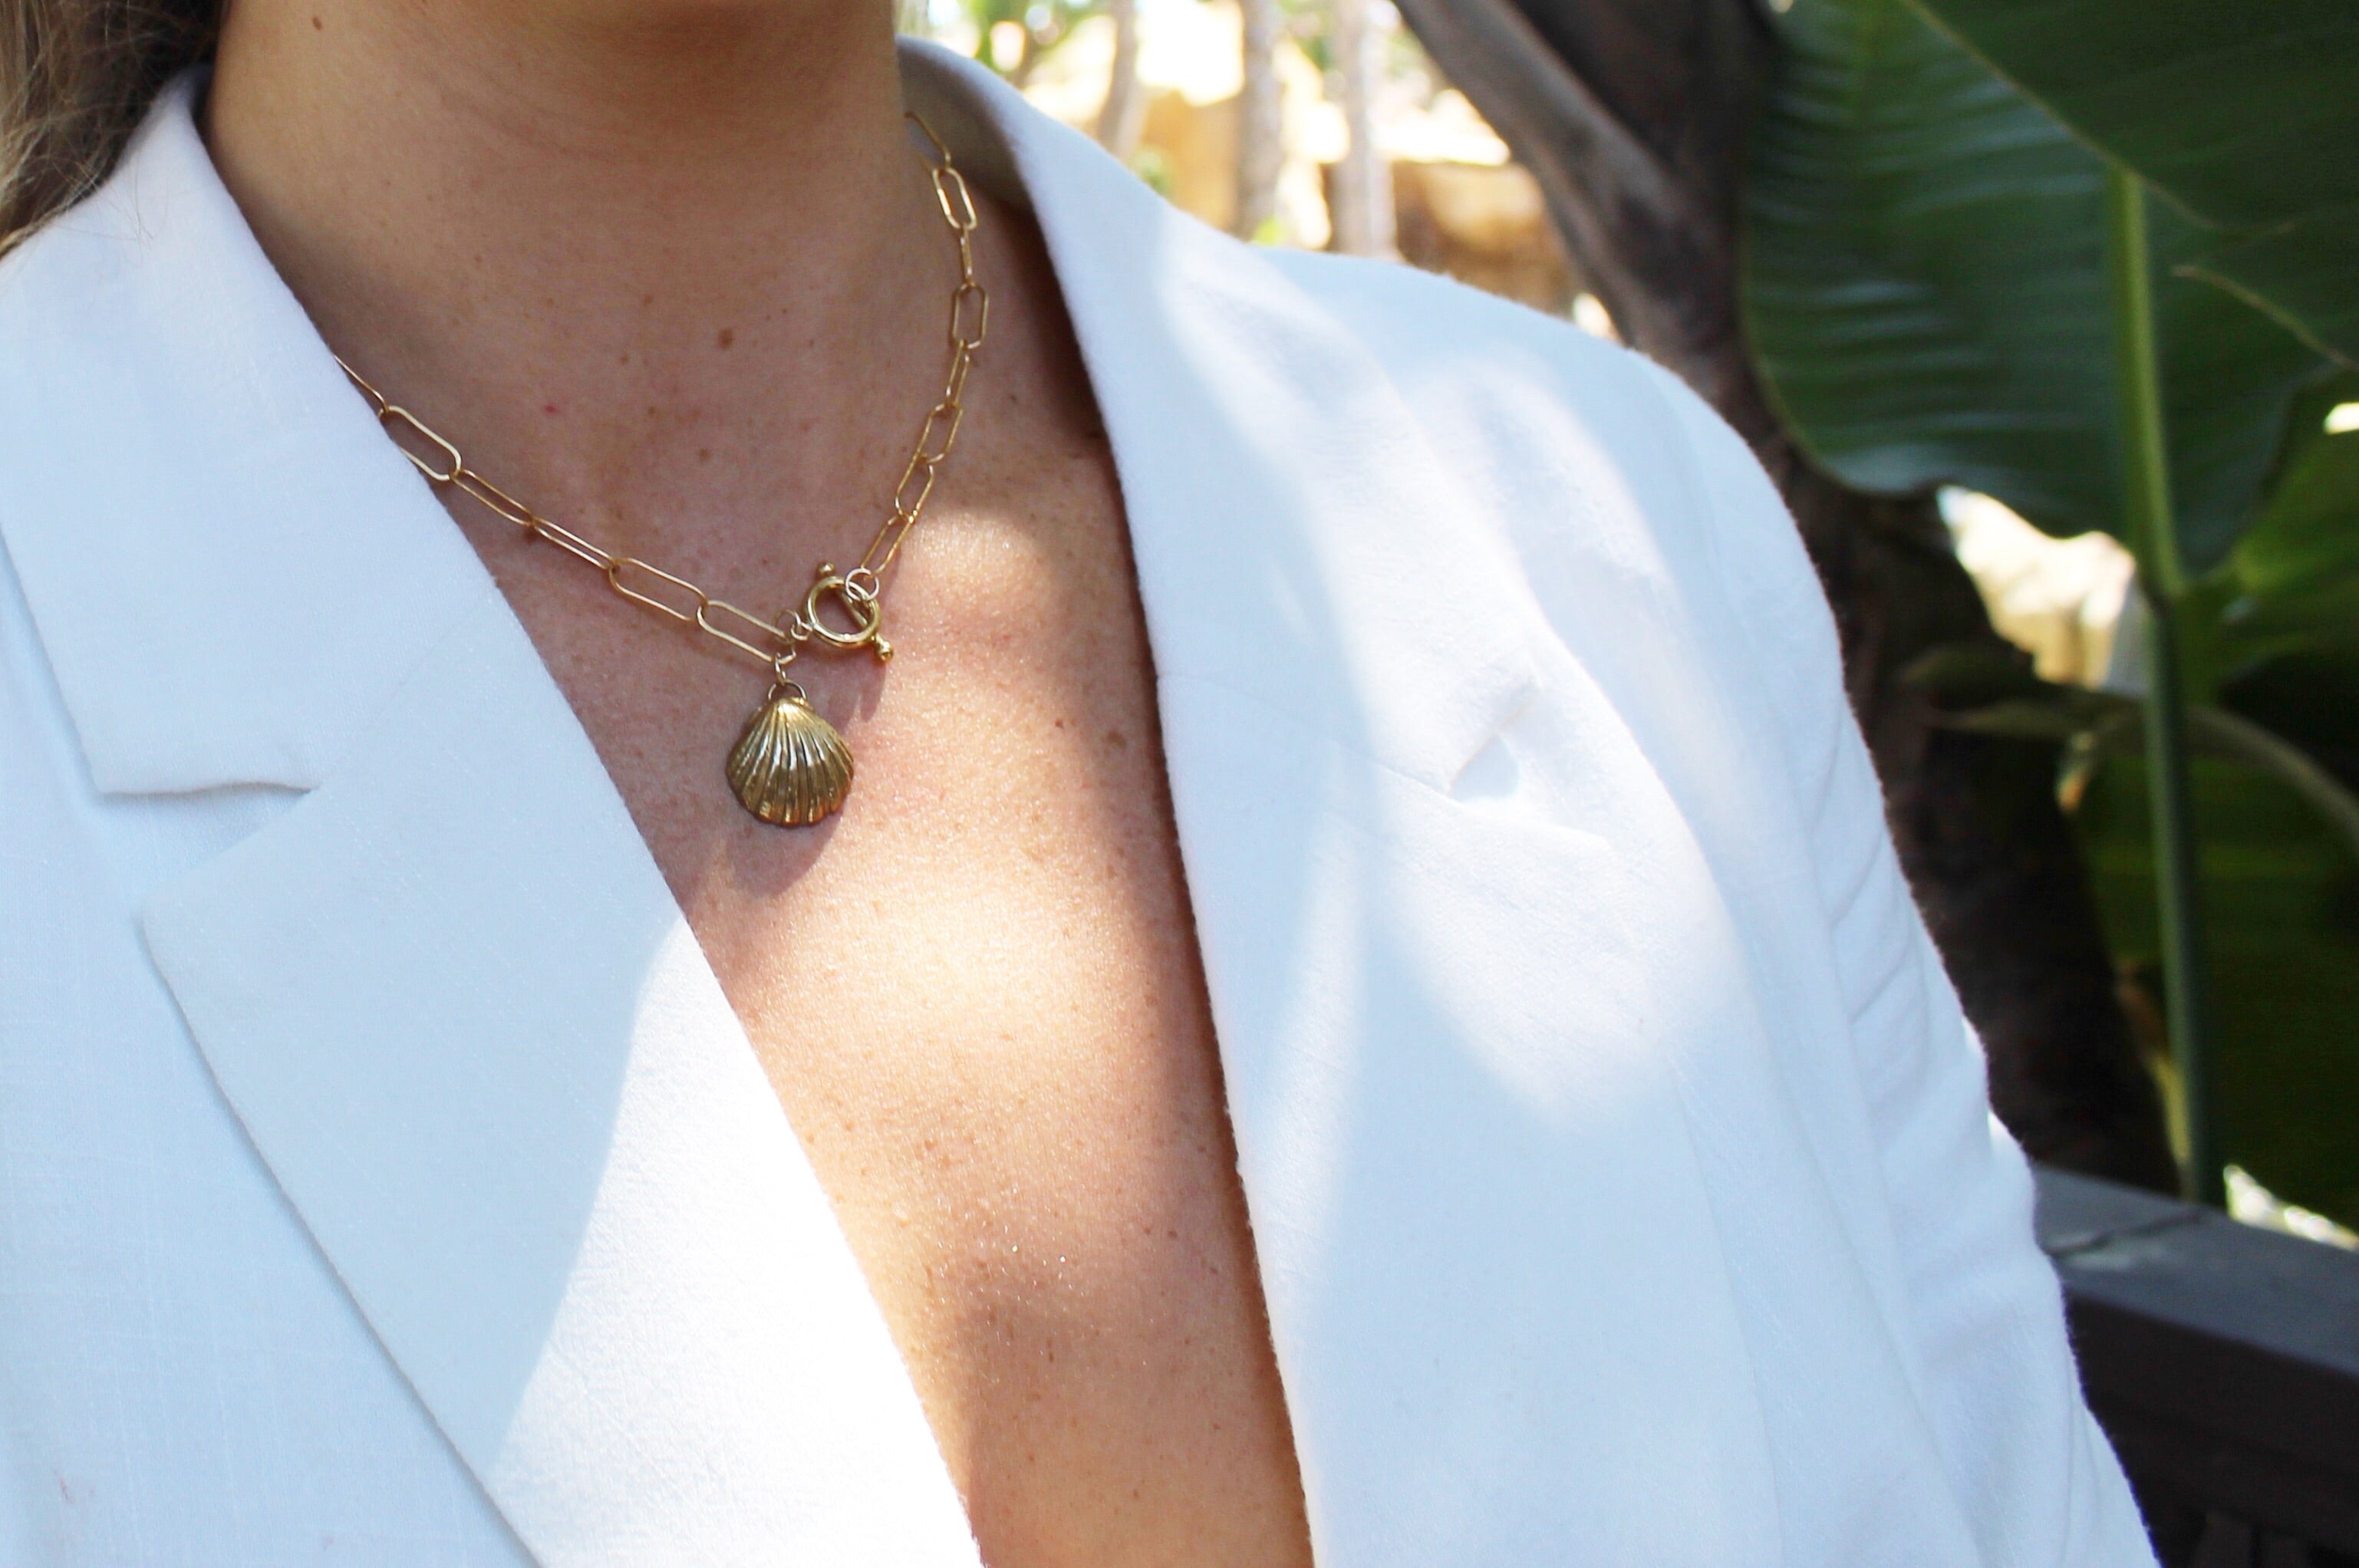 Coco Sunrise shell necklace